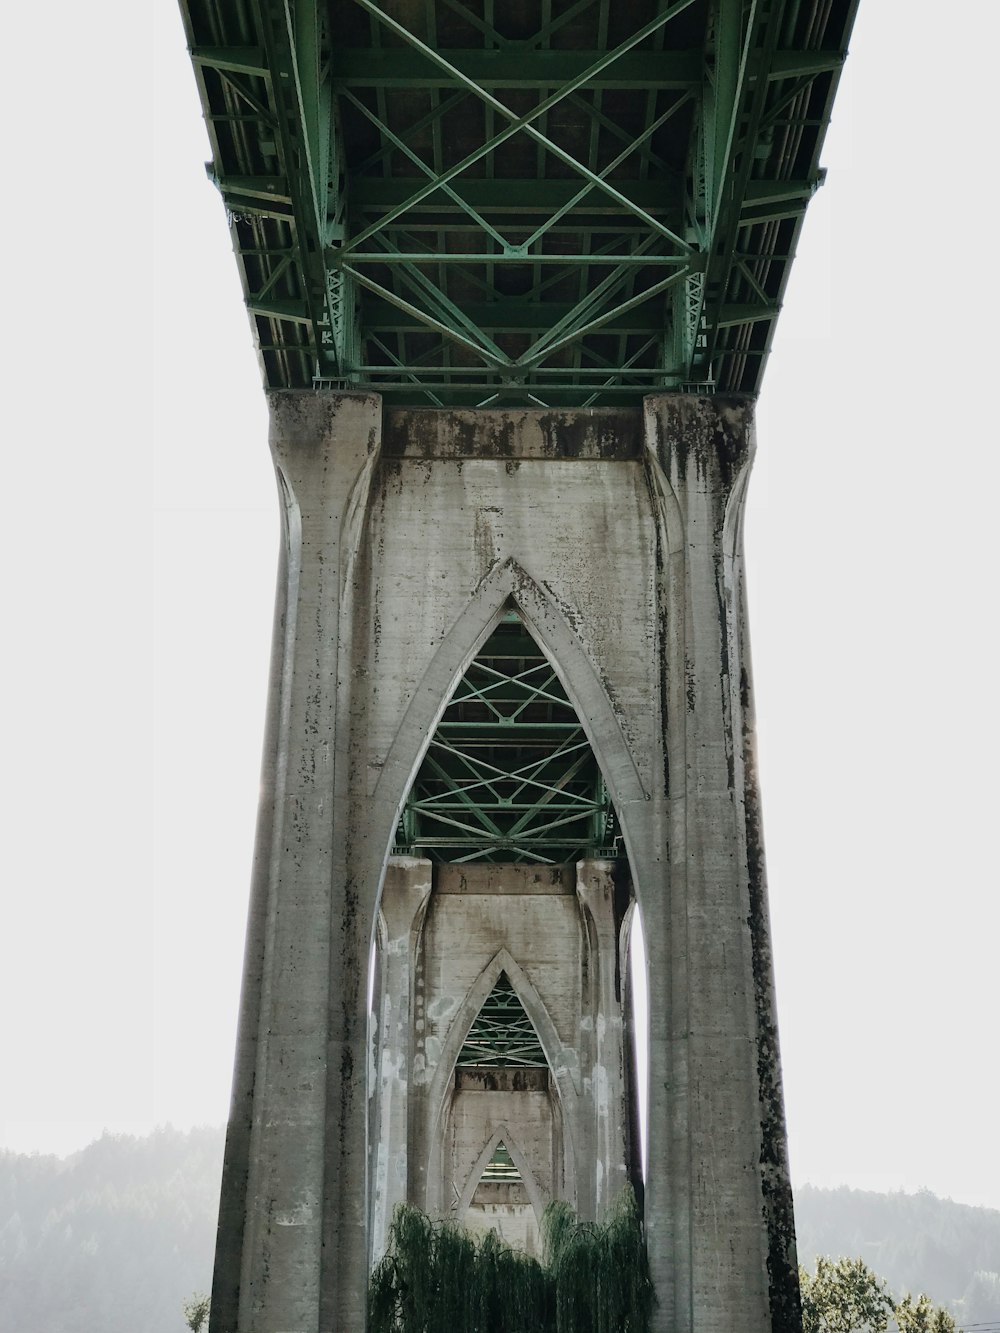 Un ponte molto alto con una torre molto alta